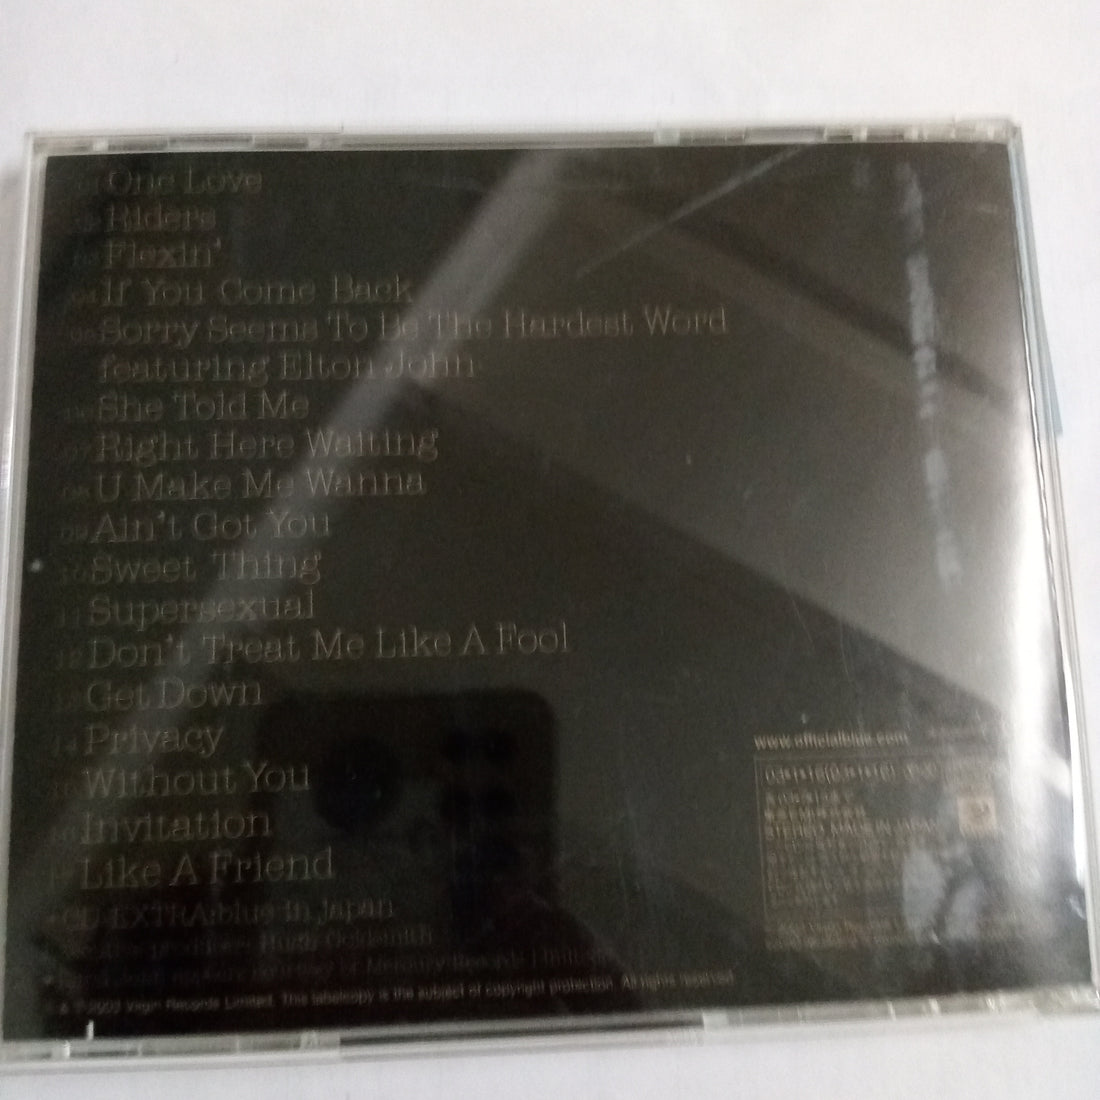 Blue  - One Love (CD) (VG+)